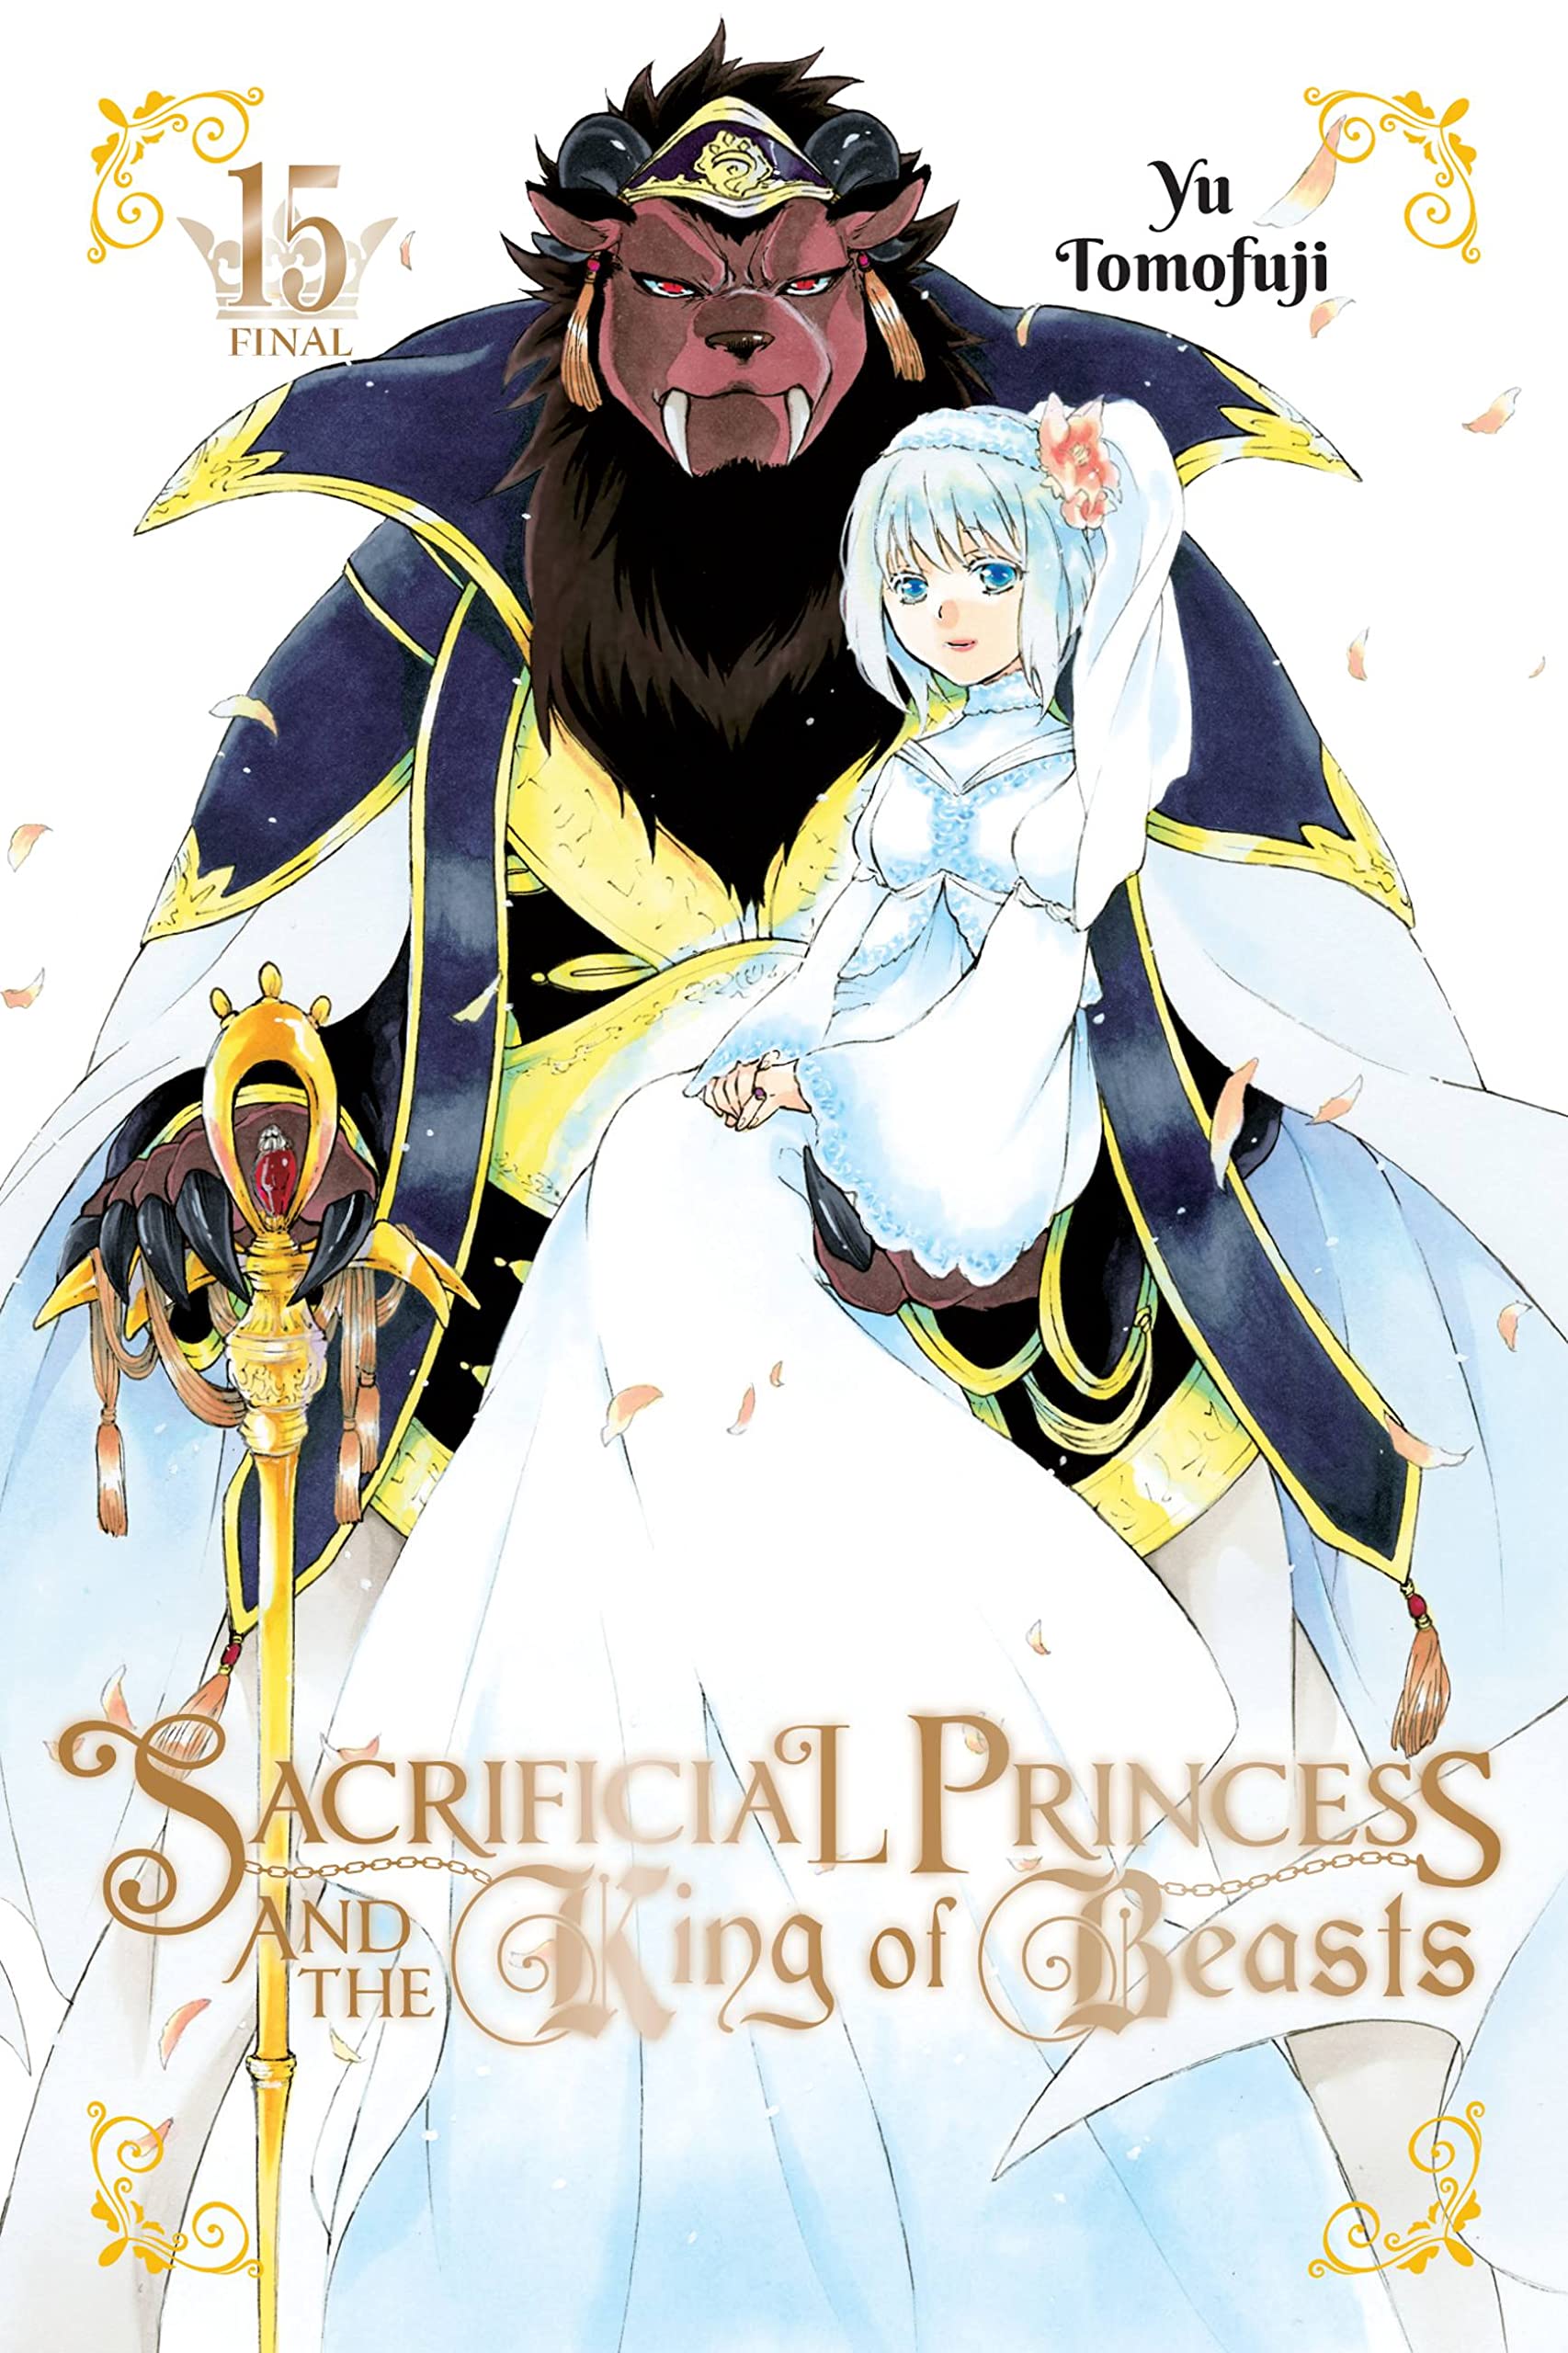 Sacrificial princess and king of beast